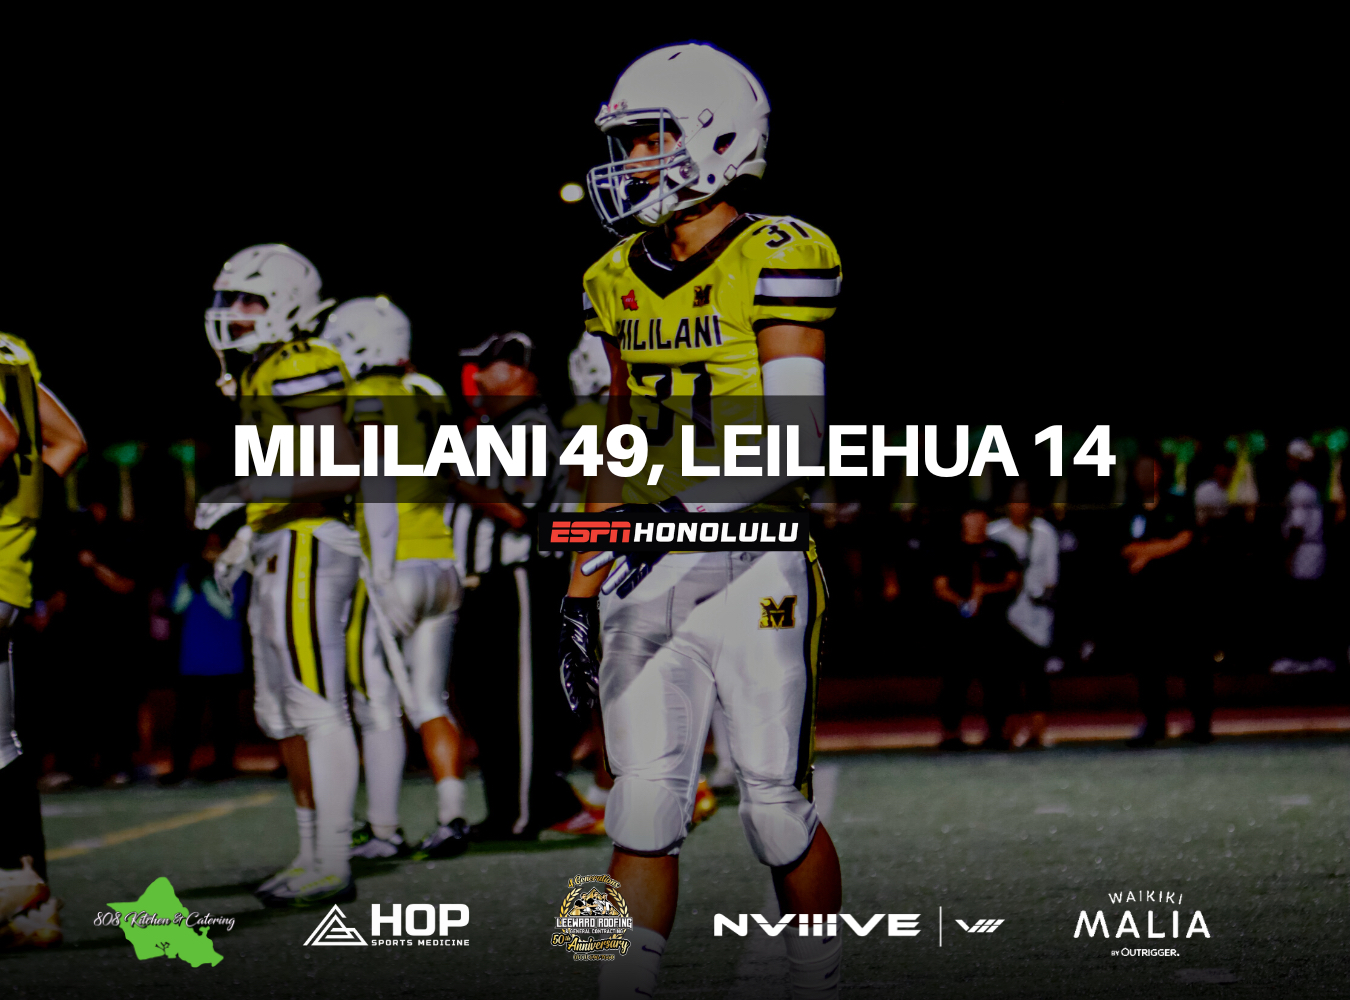 PHOTO GALLERY: High School Football | Mililani vs Leilehua, 49-14